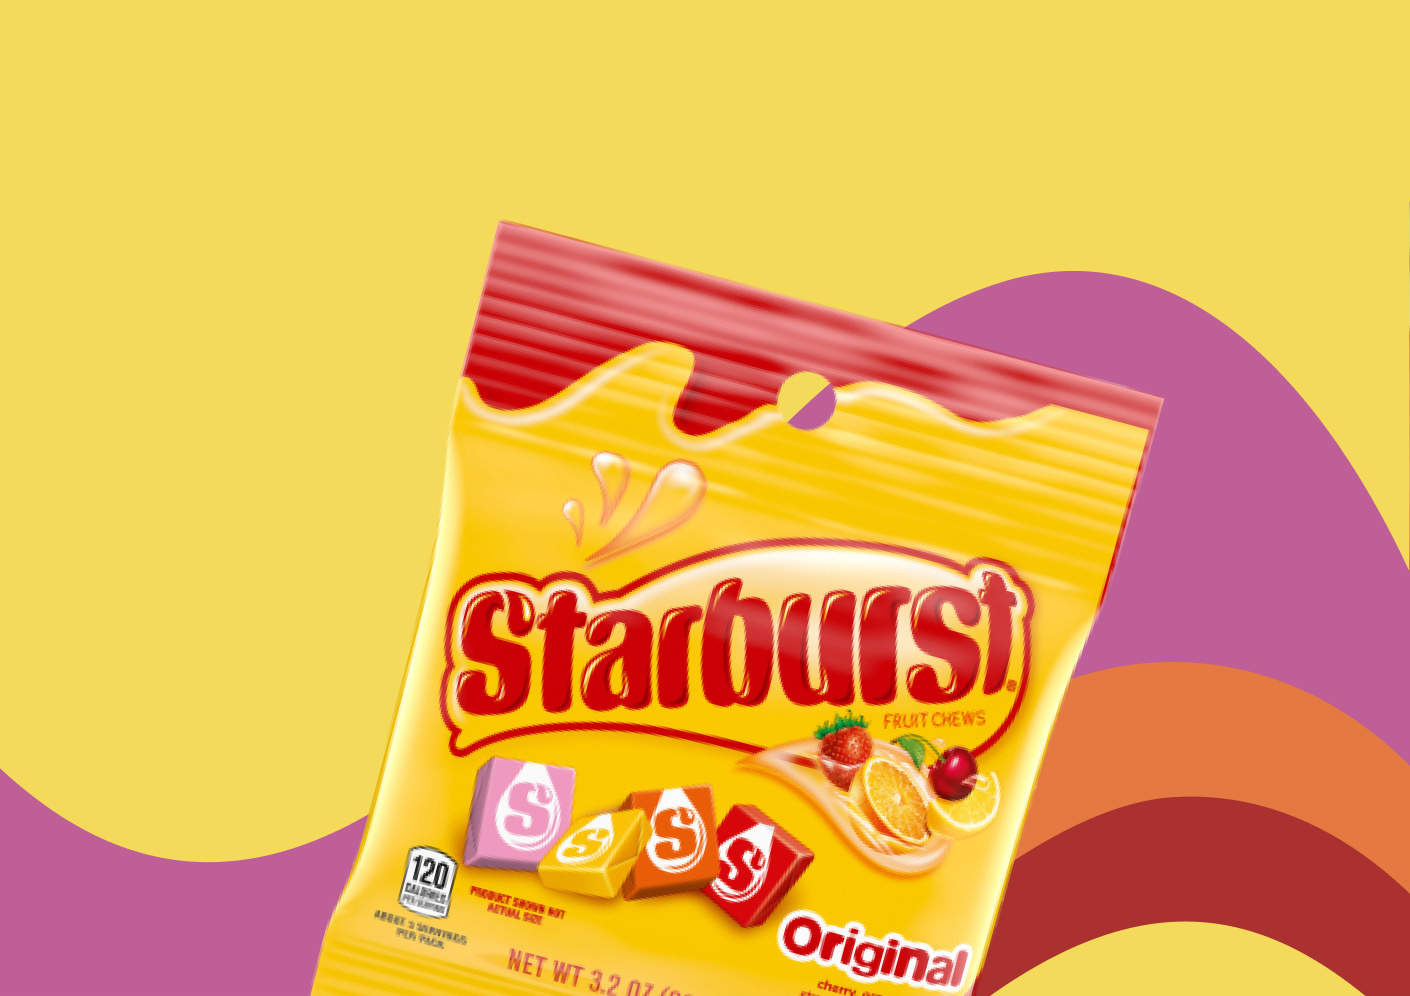 3.2 oz bag of Starburst Original chews